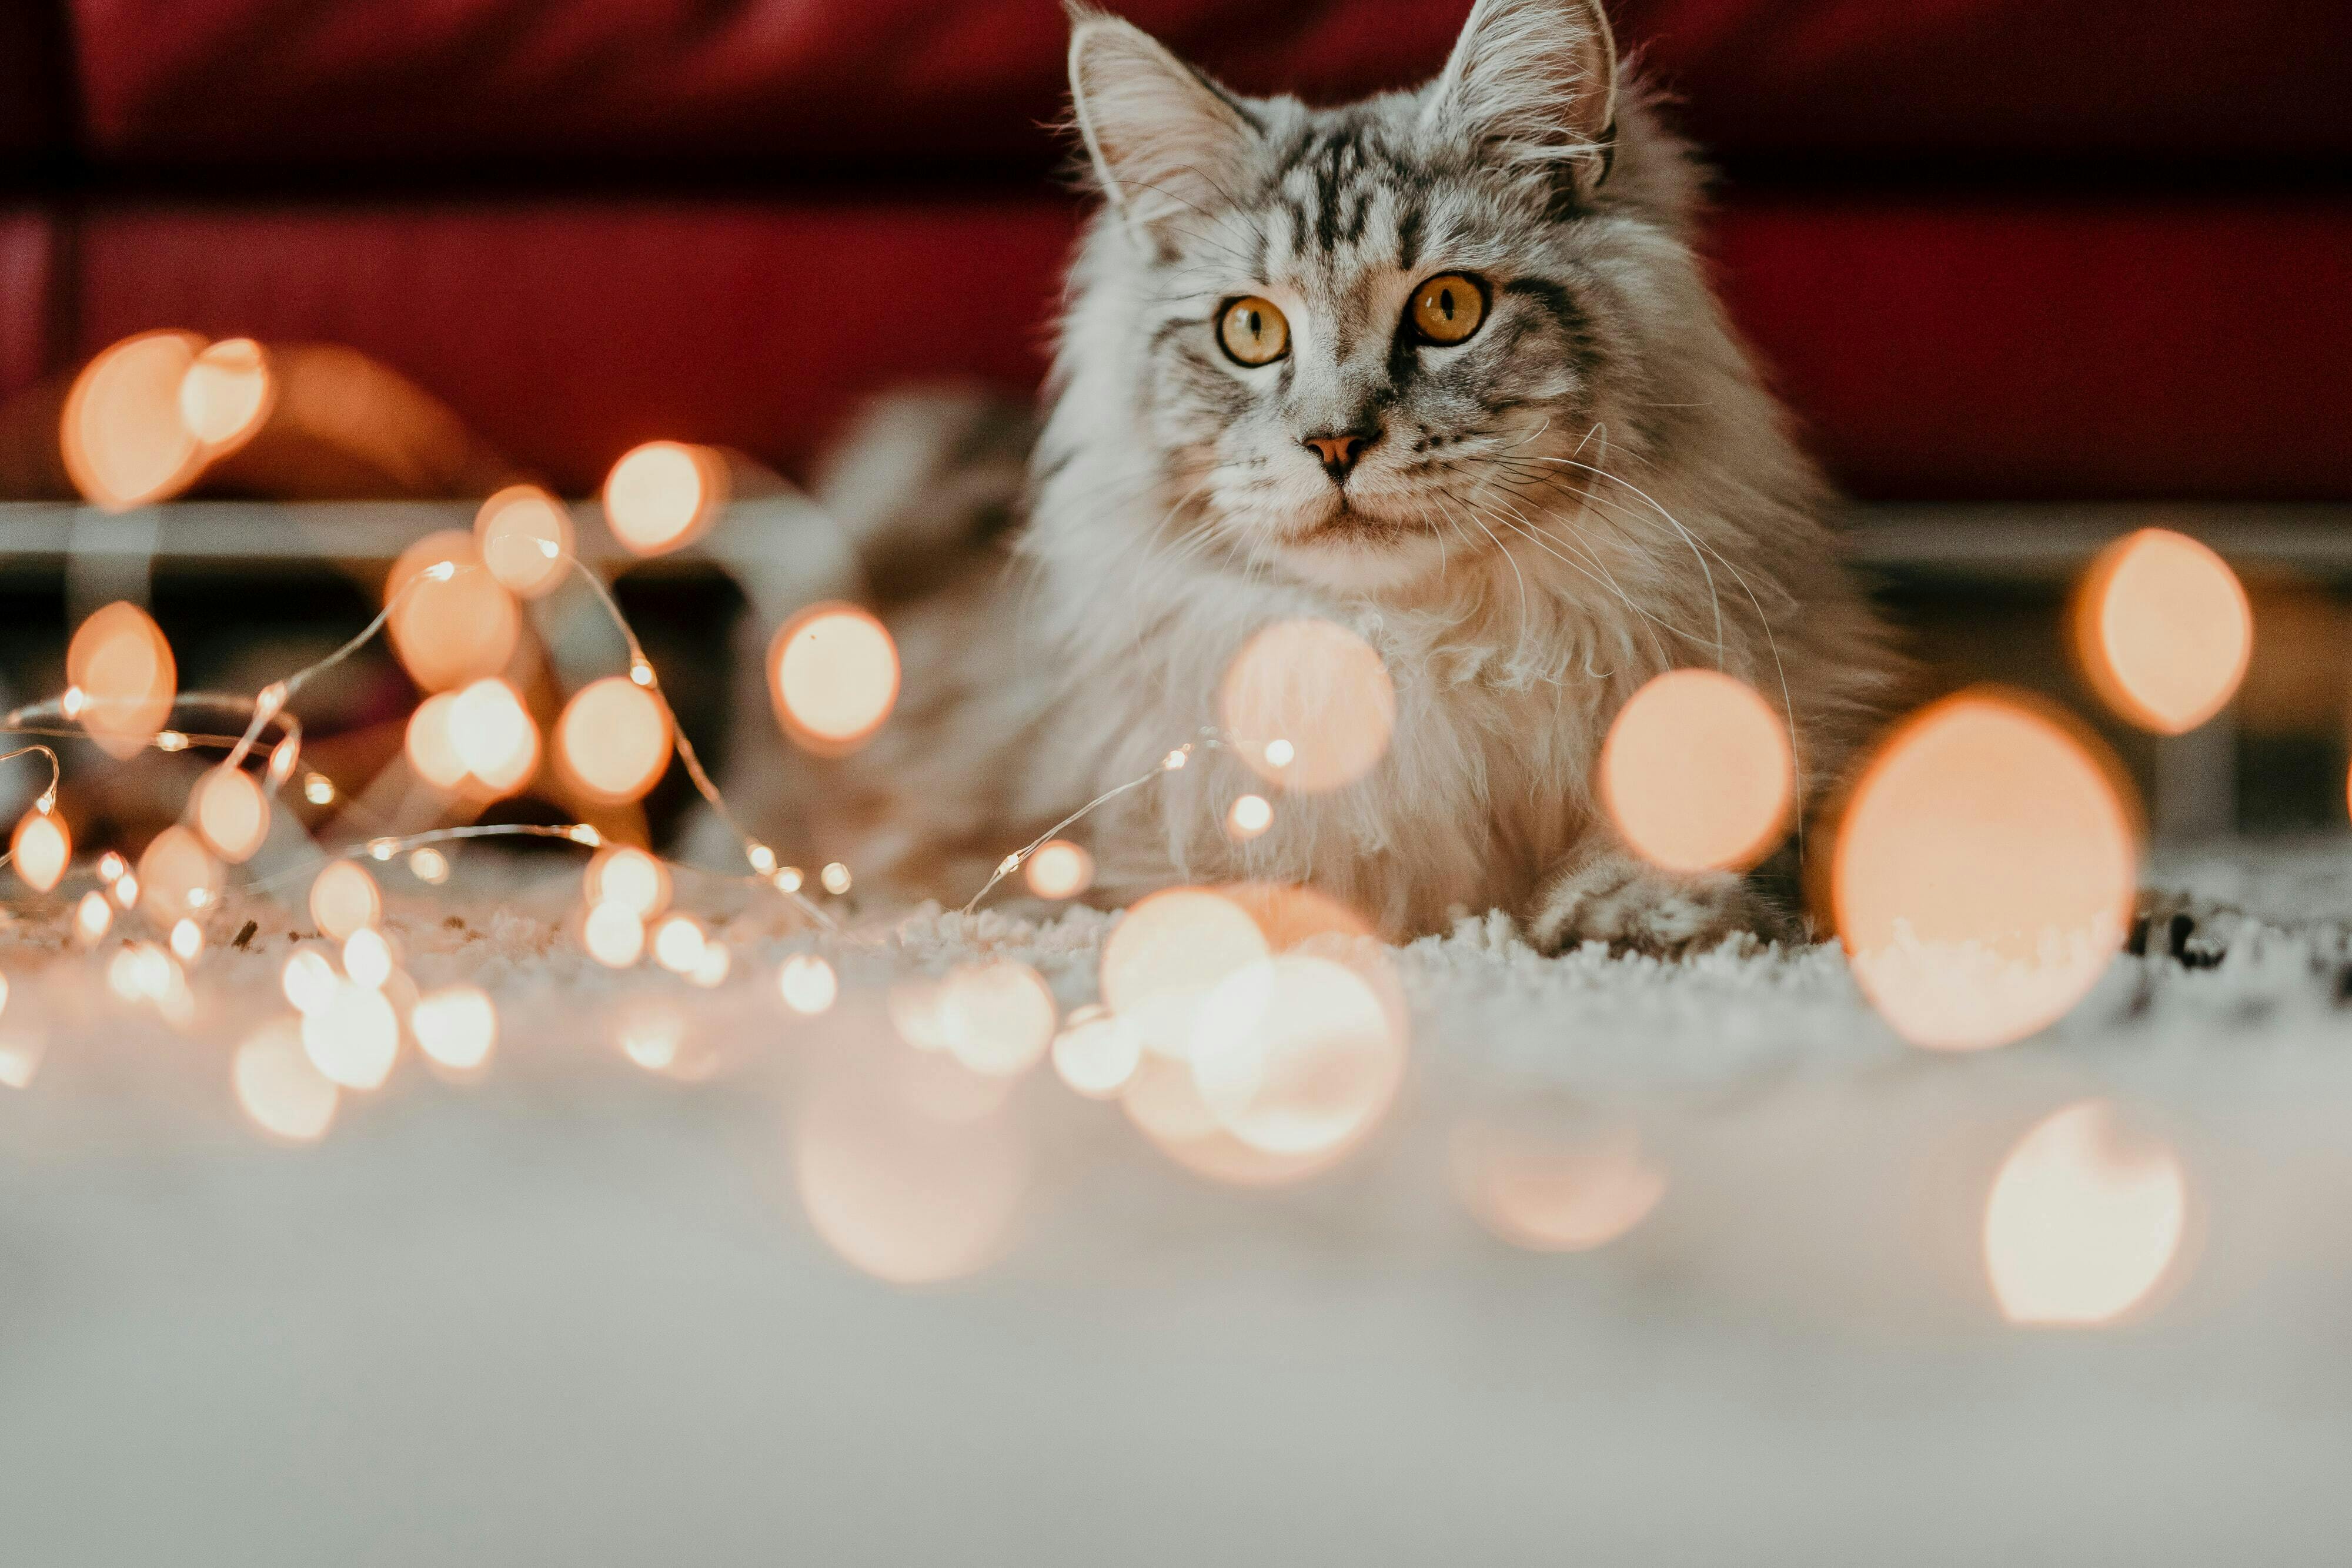 Cat looking at holiday string lights.